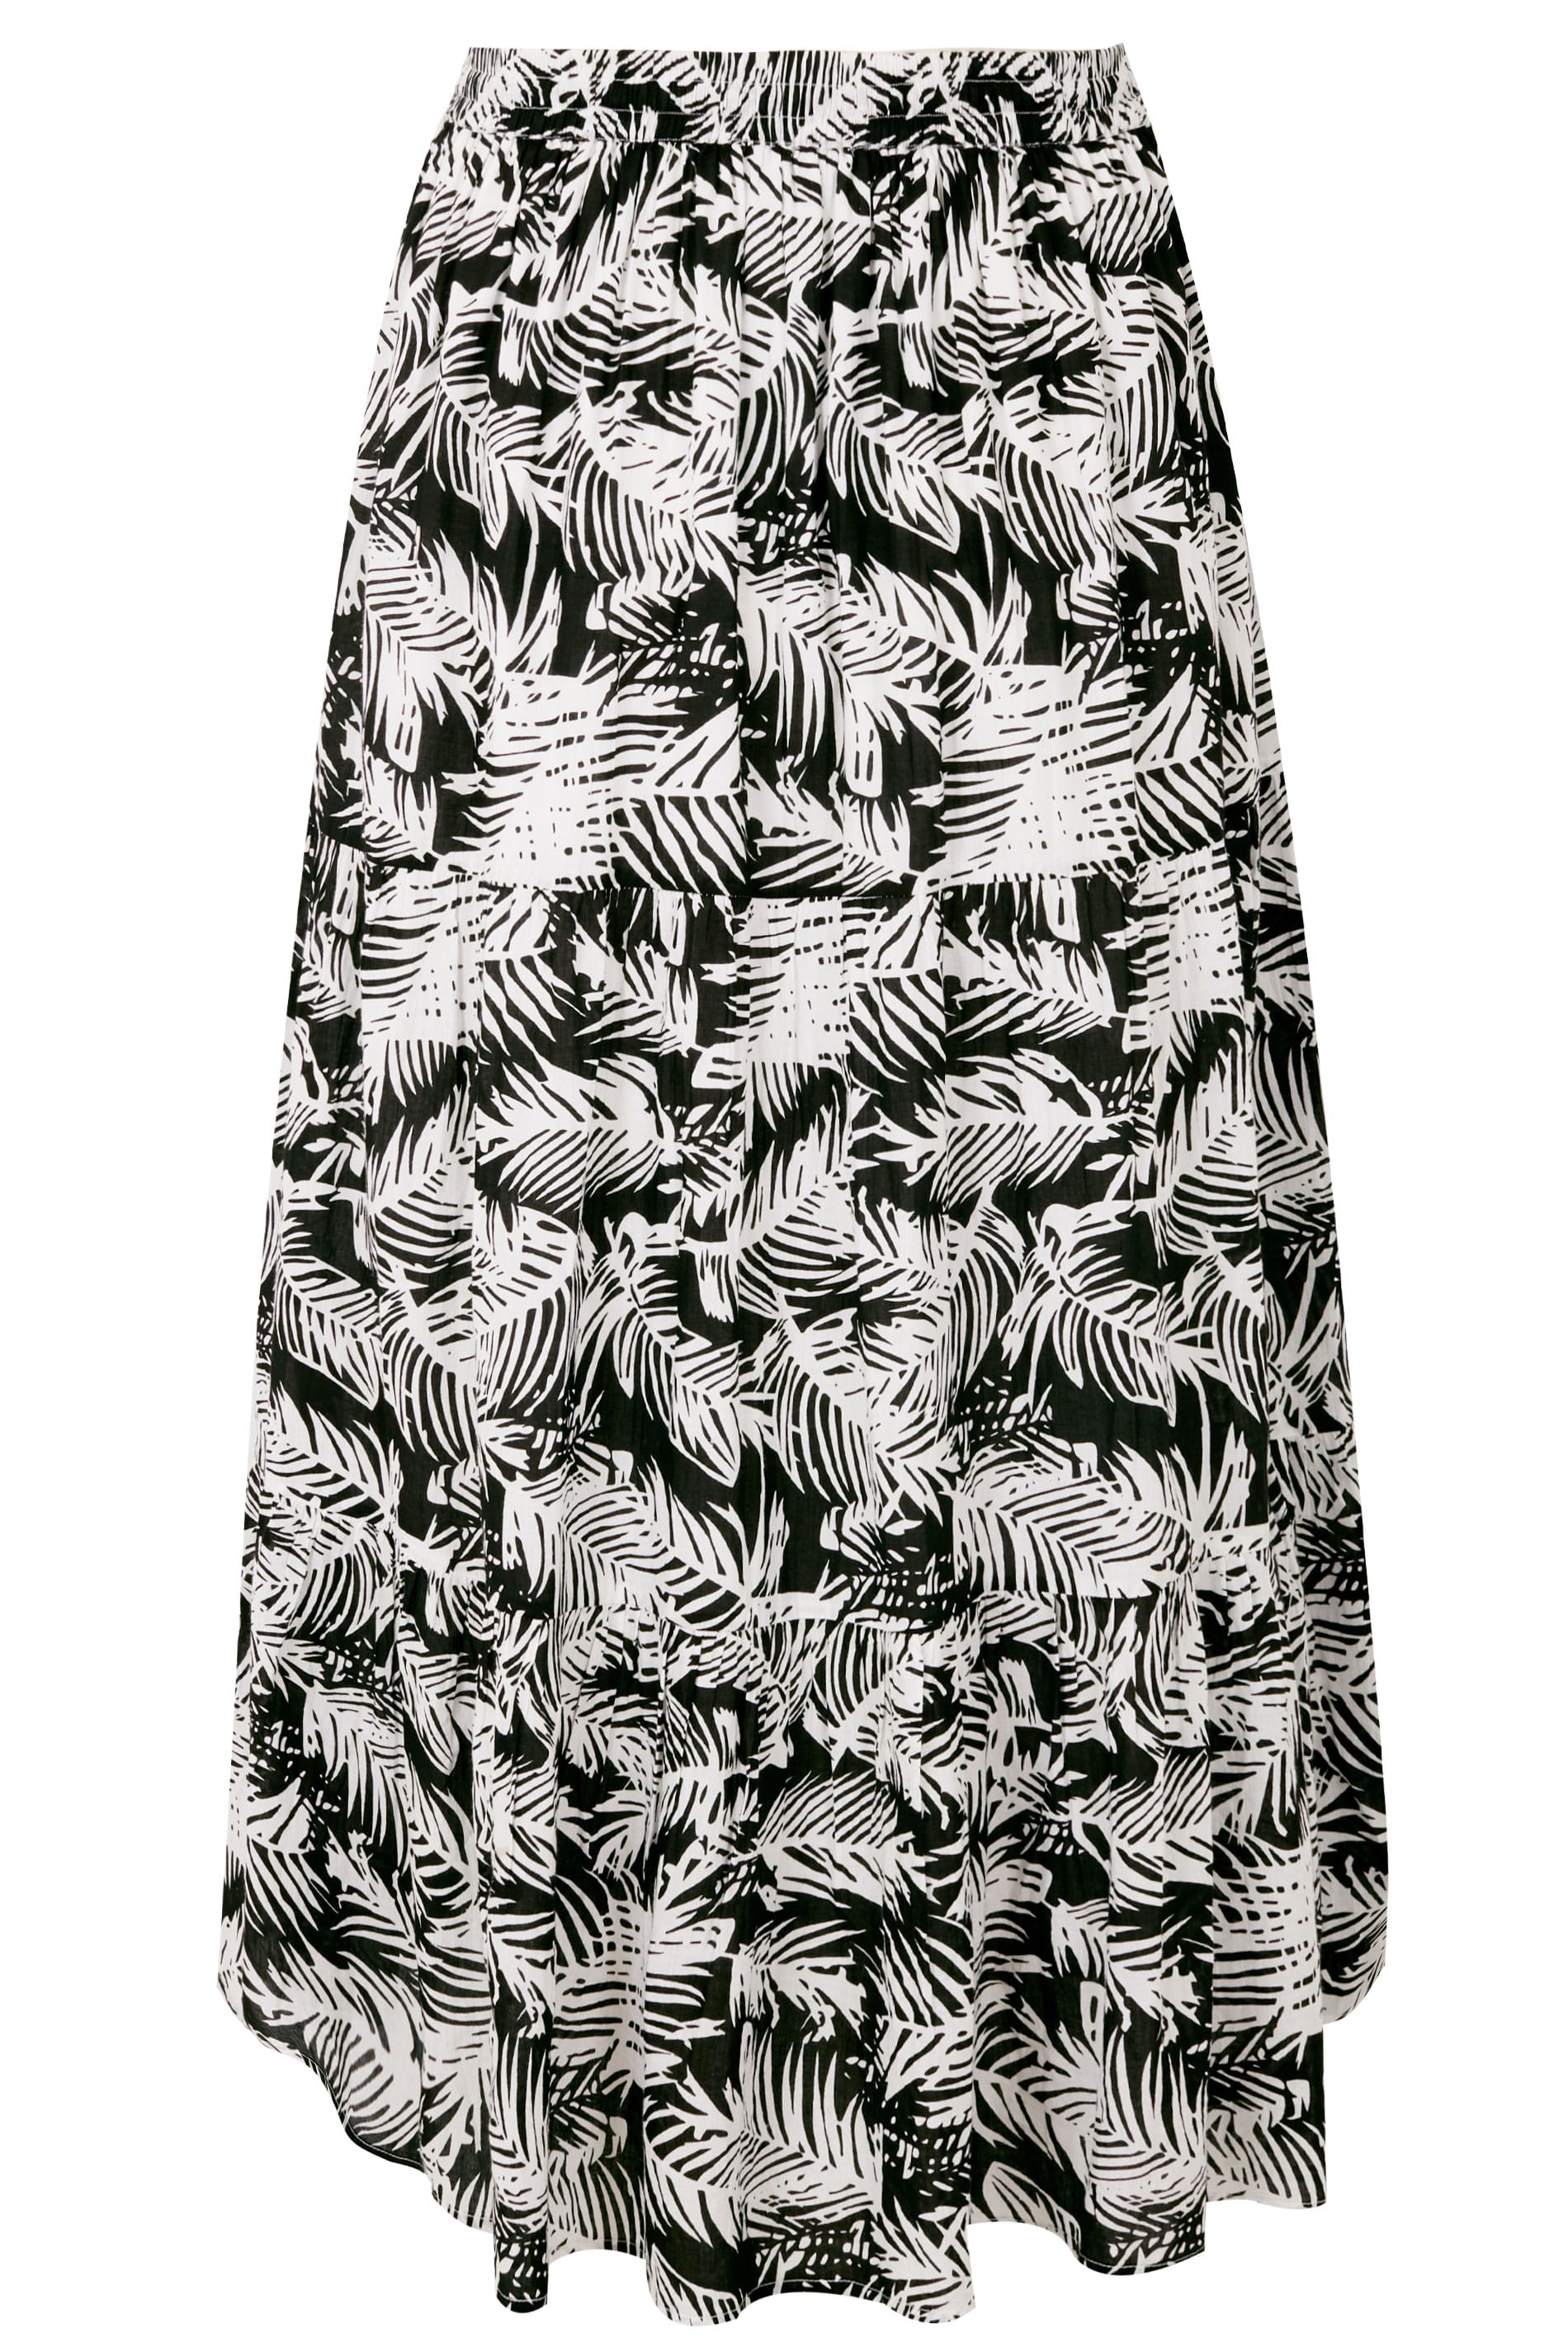 Black & White Leaf Print Tiered Maxi Skirt, plus size 16 to 36